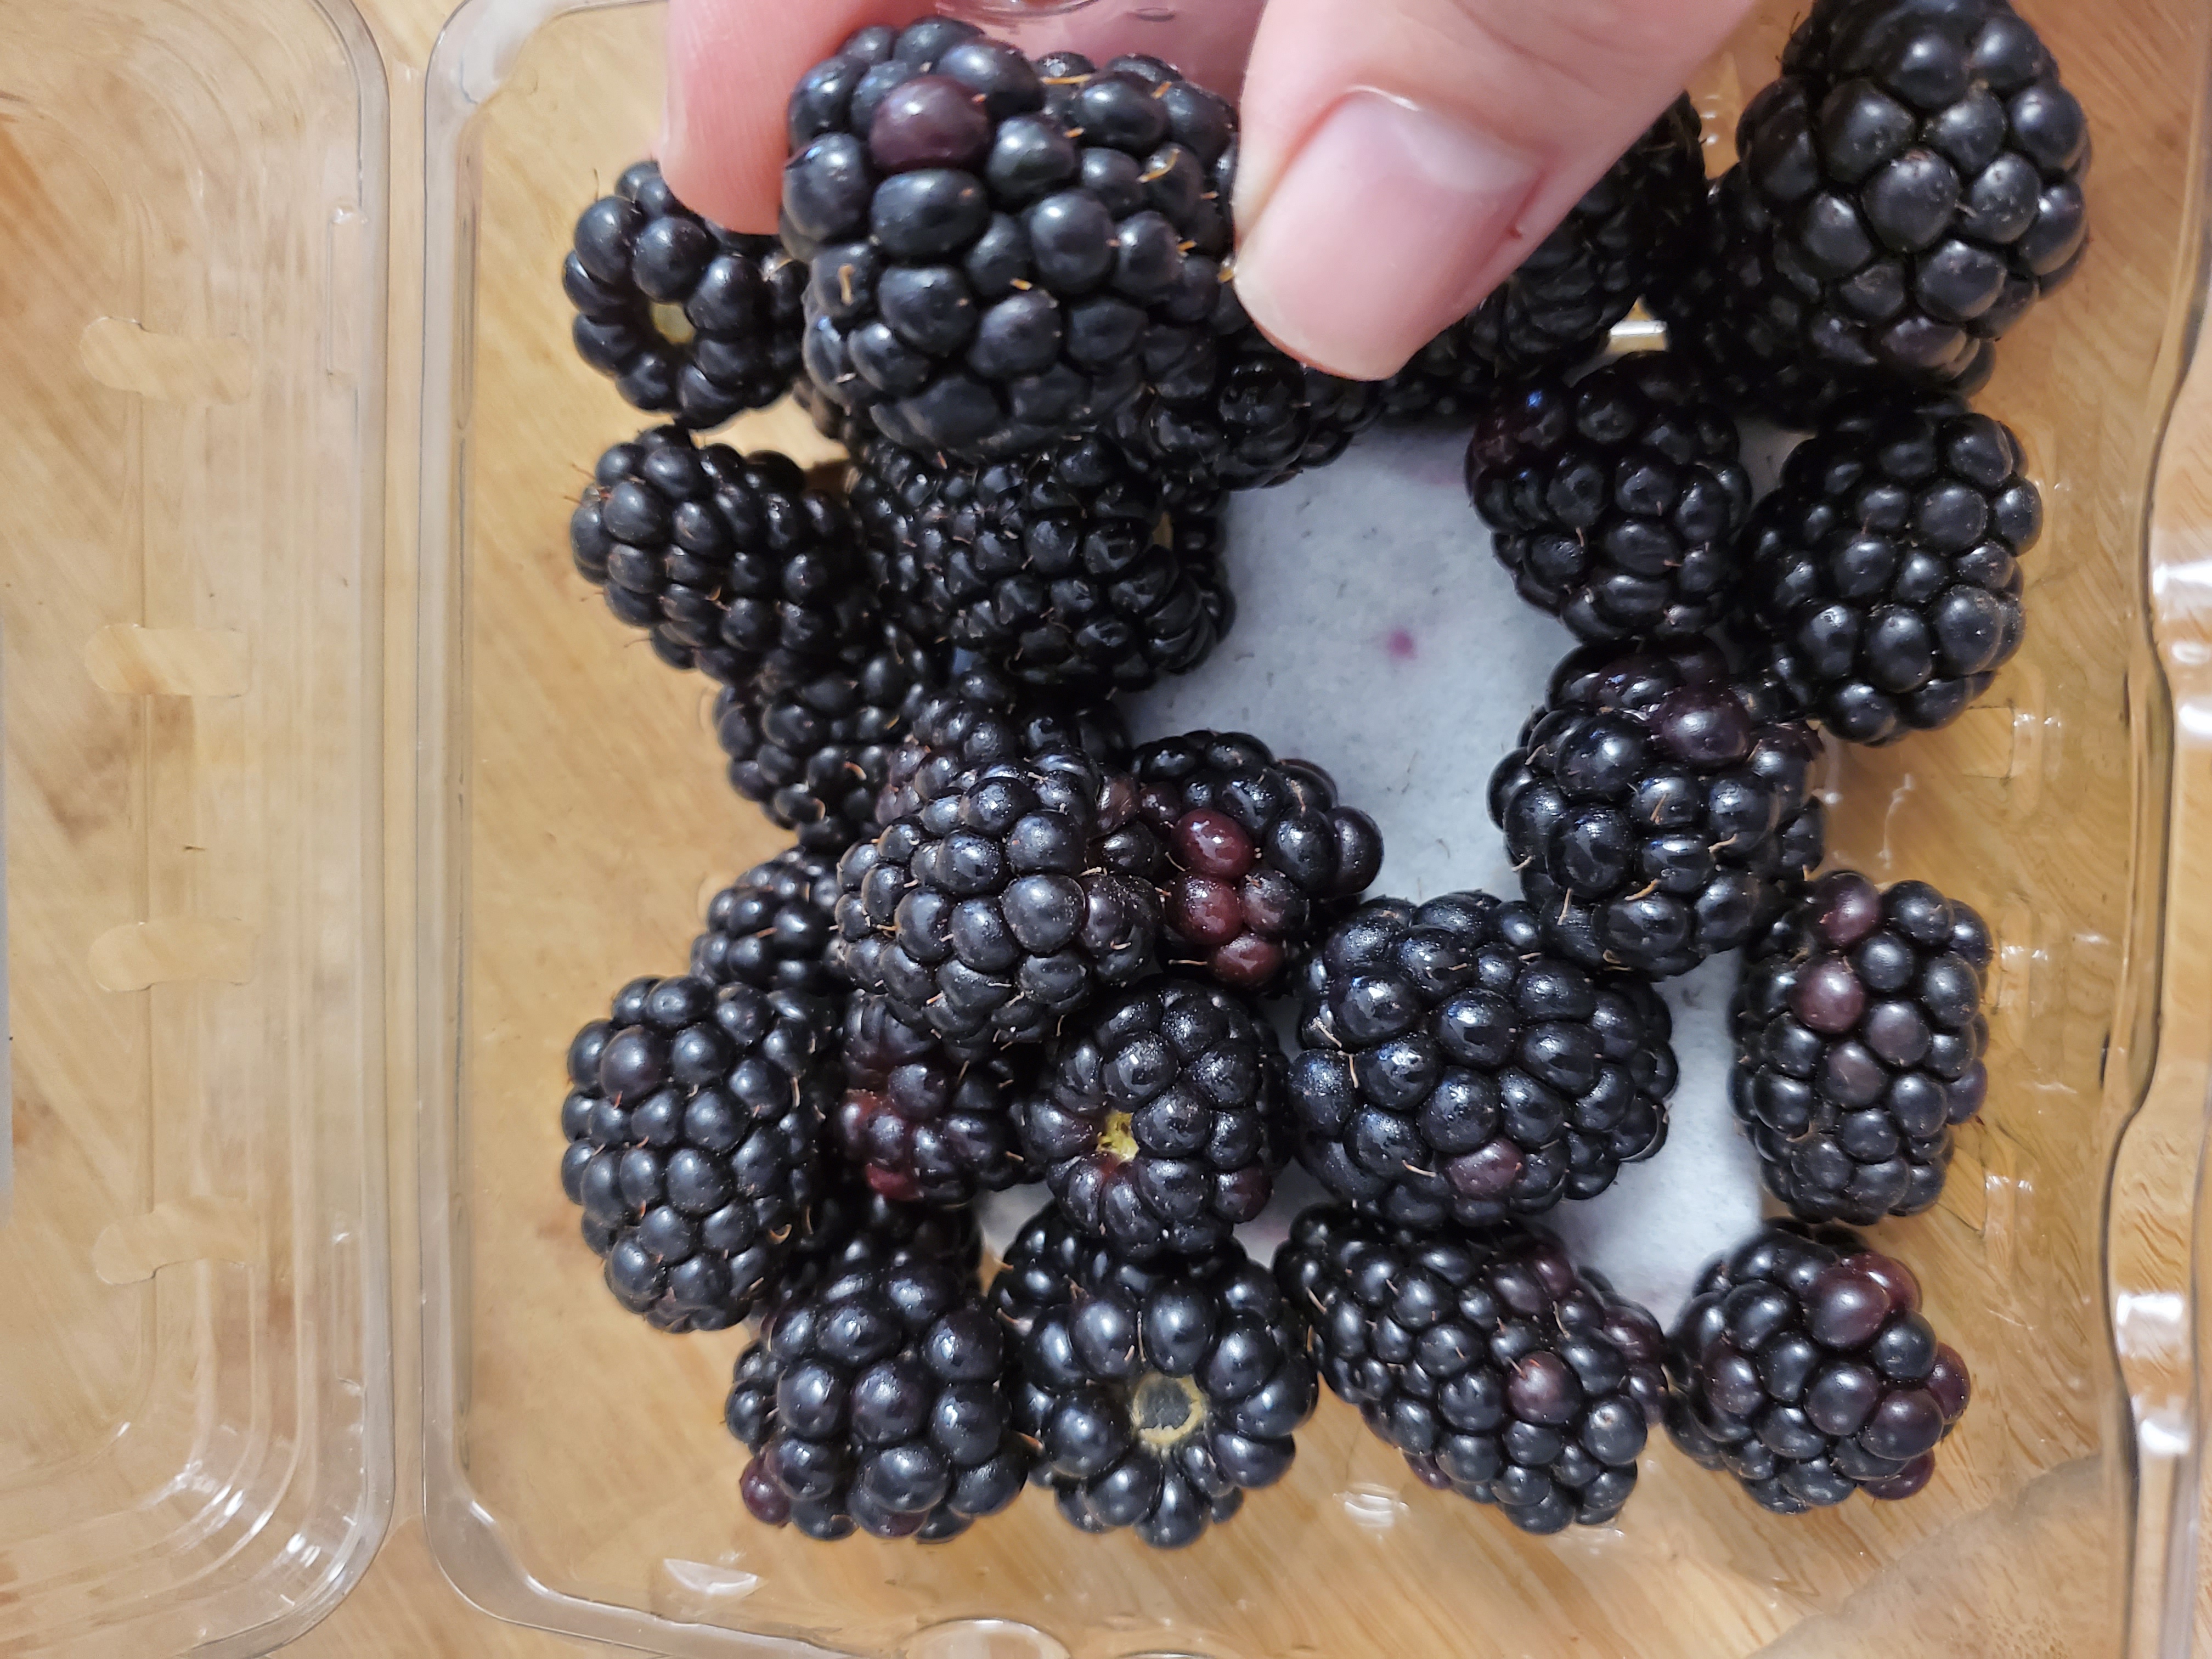 container of fresh blackberries